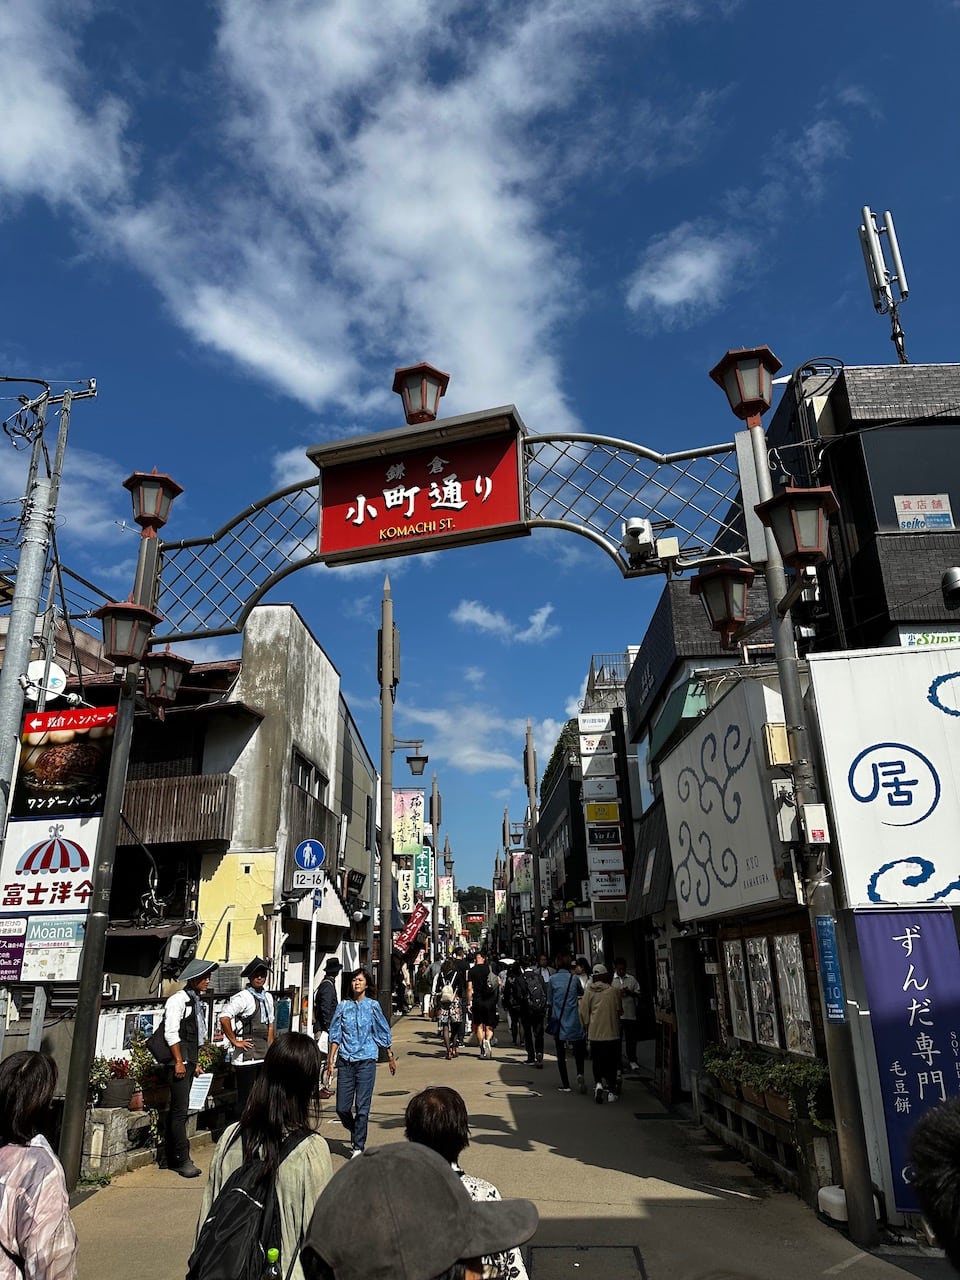 Komachi street in Kamakura